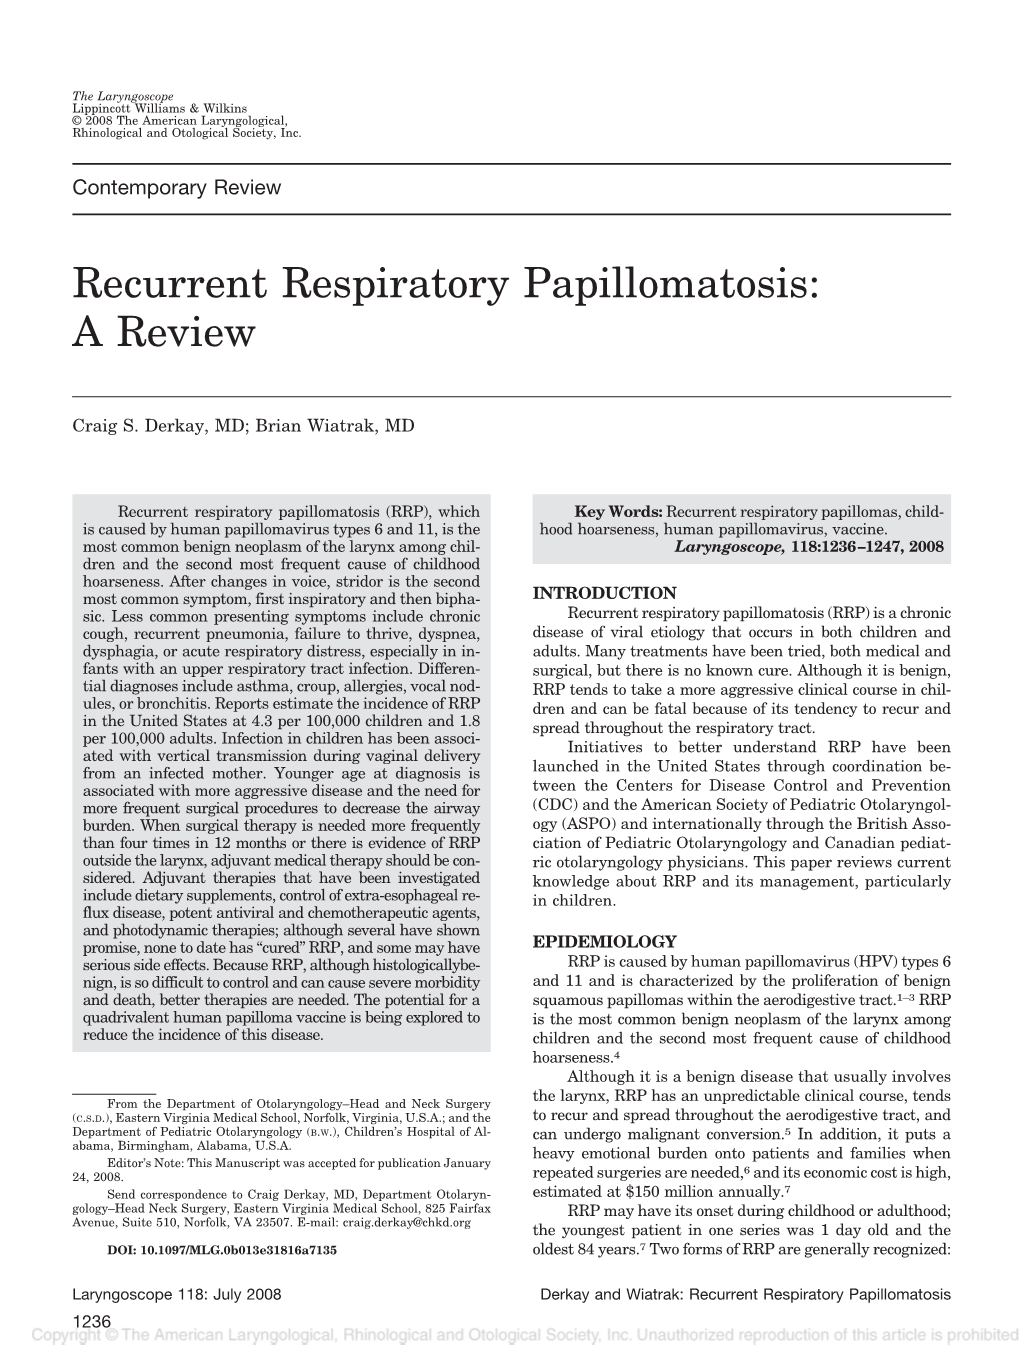 Recurrent Respiratory Papillomatosis: a Review